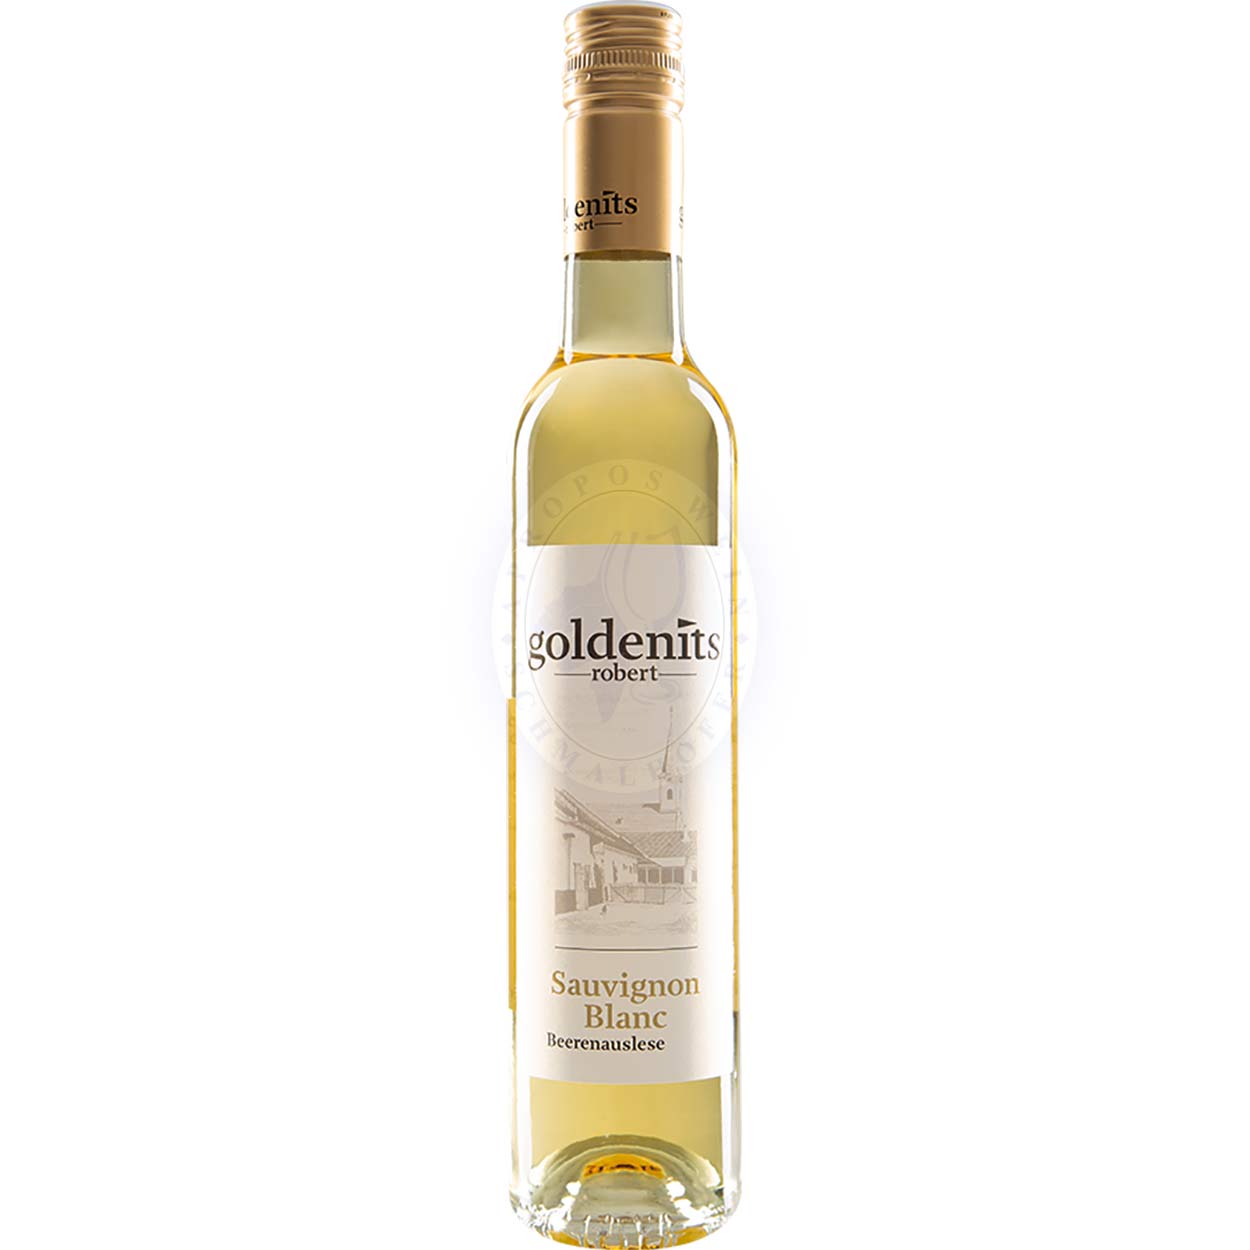 Goldenits Beerenauslese Sauvignon Blanc 2018 Weingut Robert Goldenits 0,375l